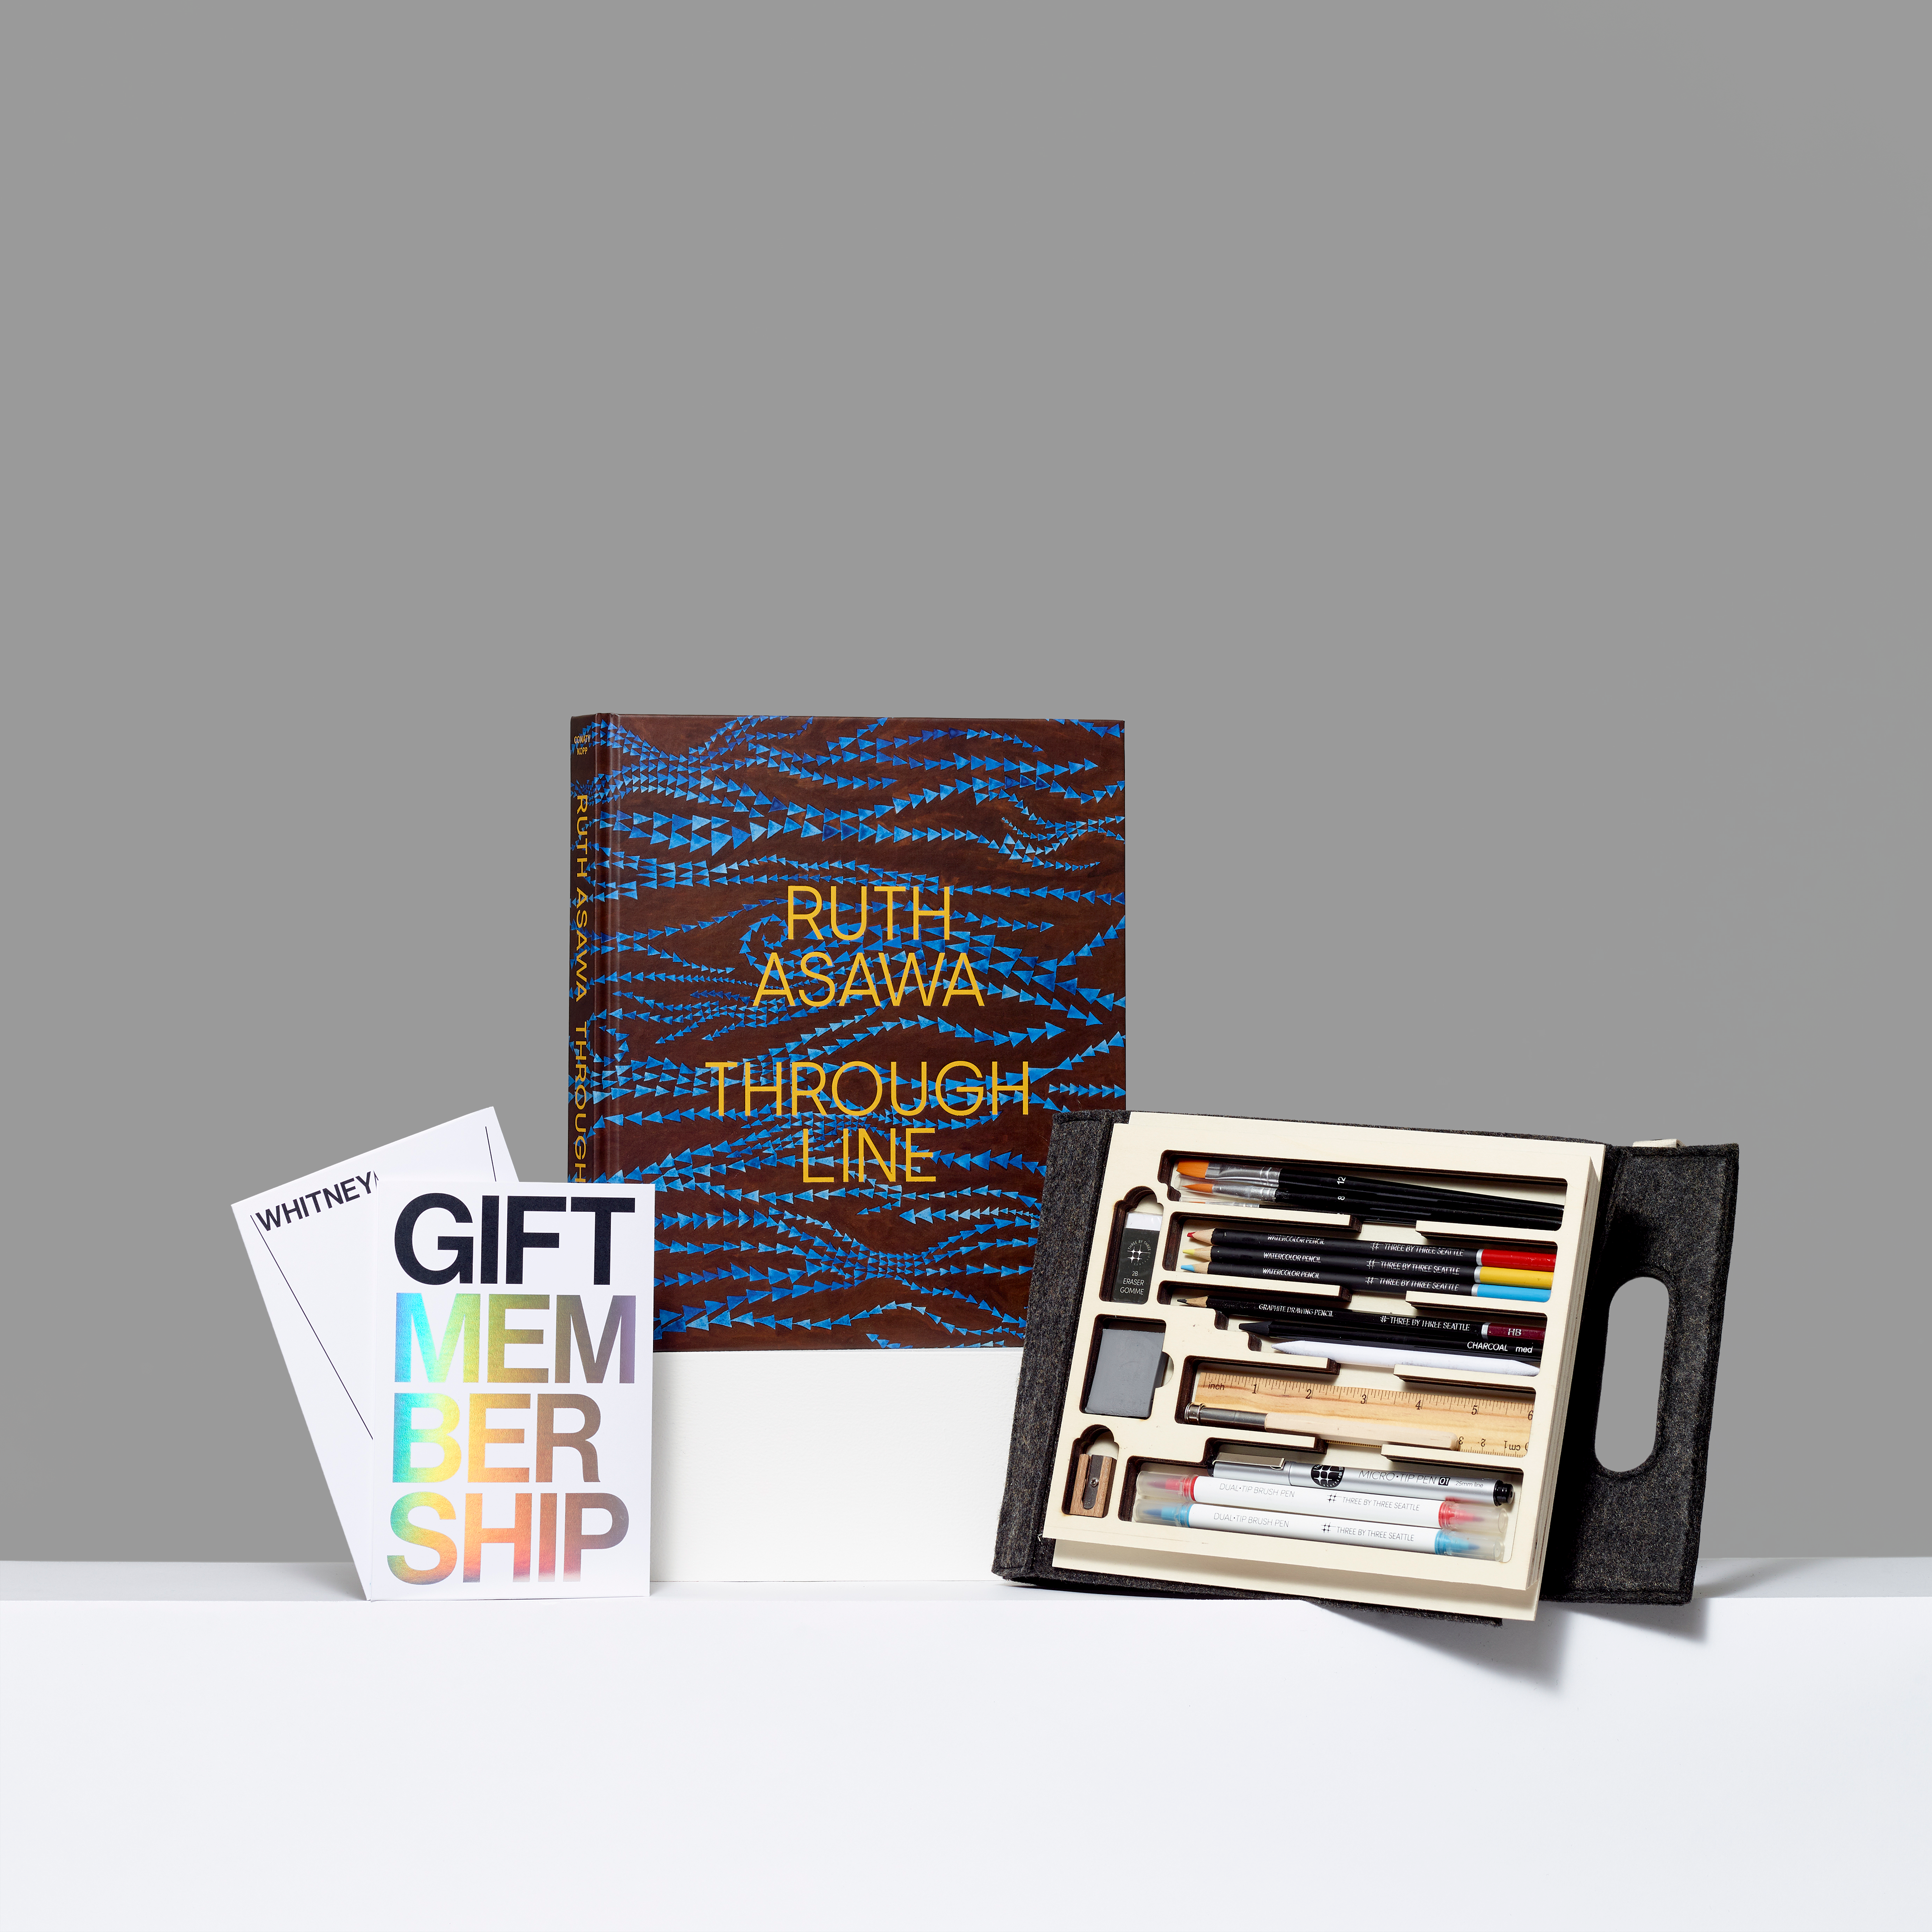 Holiday bundle featuring Gift Membership, Ruth Asawa Through Line Exhibition Catalogue, jotblock portable studio essentials